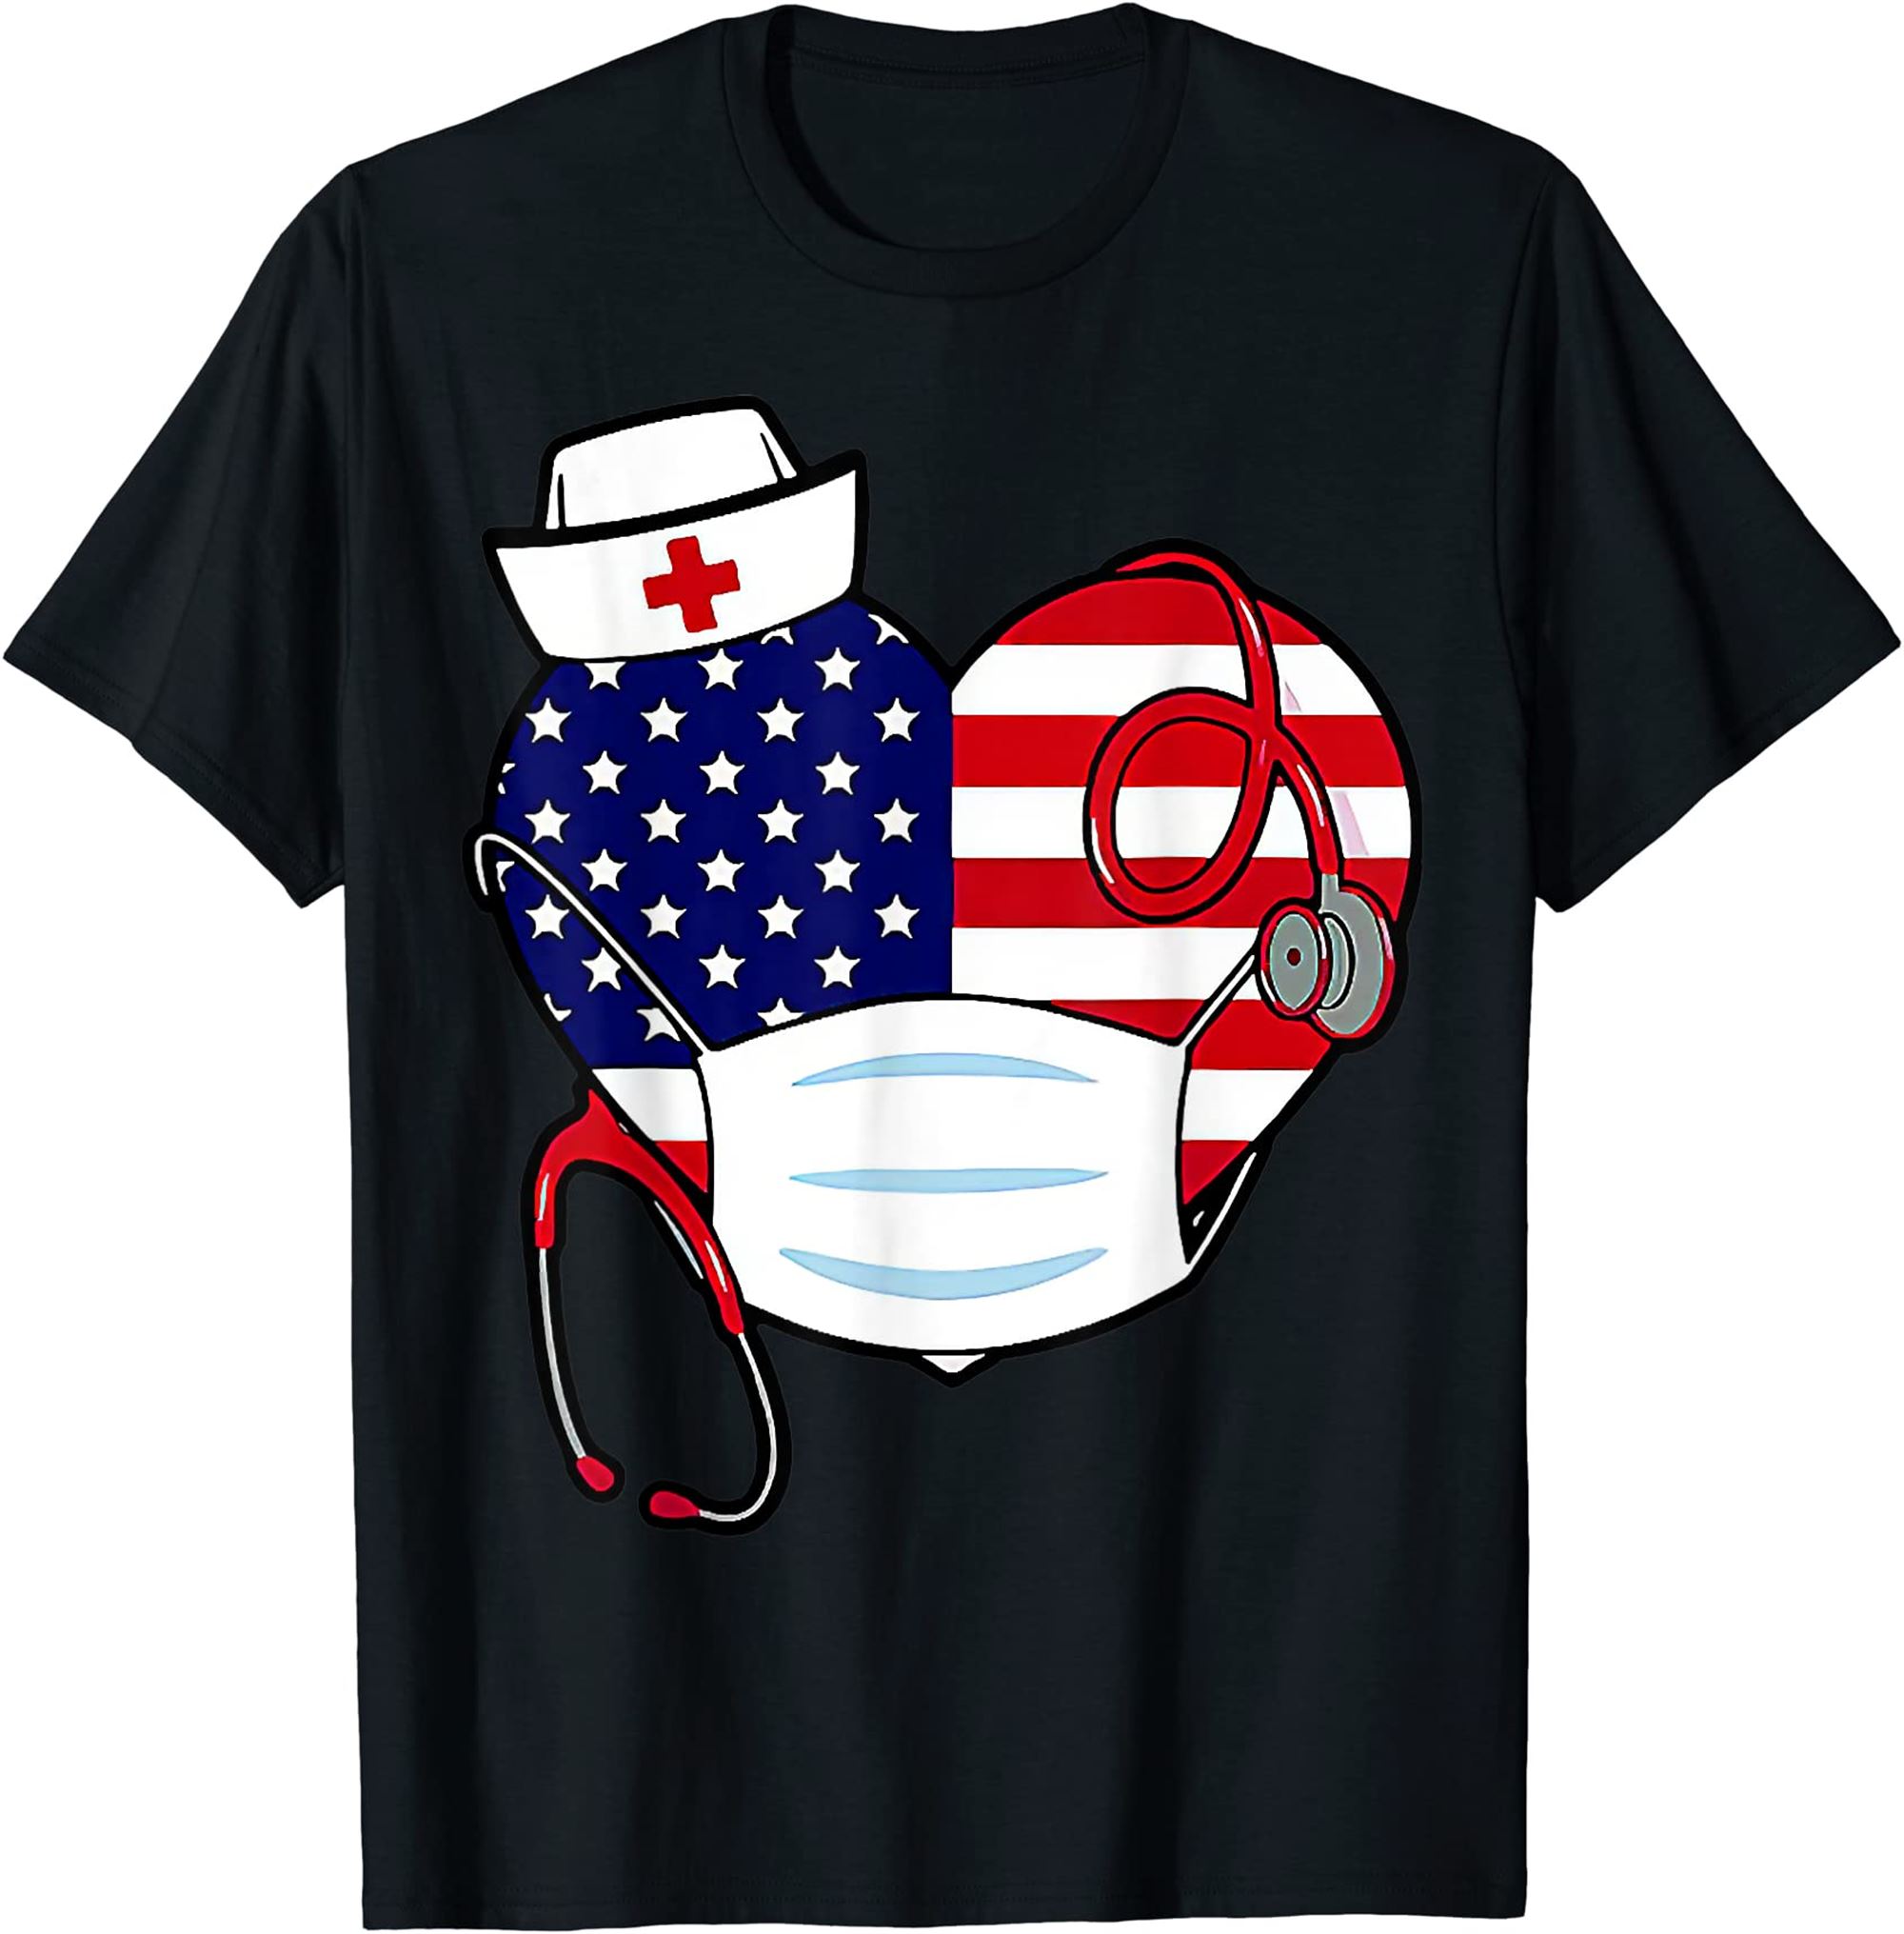 Christmas Nurse America Heart 4th Of July Of Nurse Fun T-shirt Full Size Up To 5xl